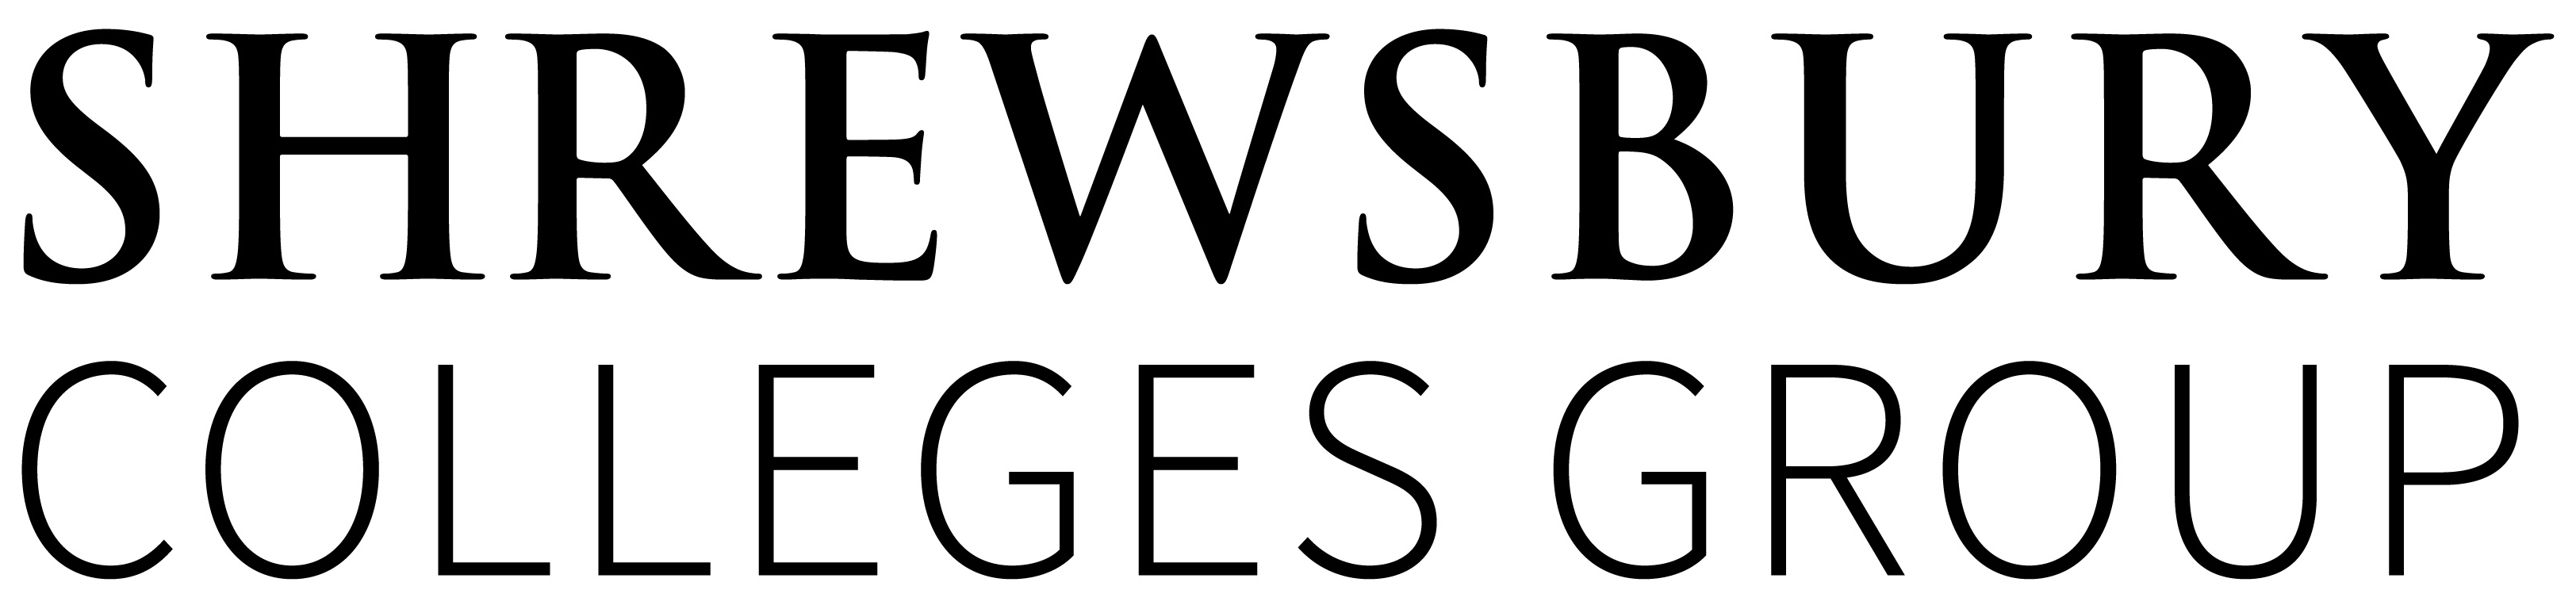 Shrewsbury Colleges GroupRGB logo